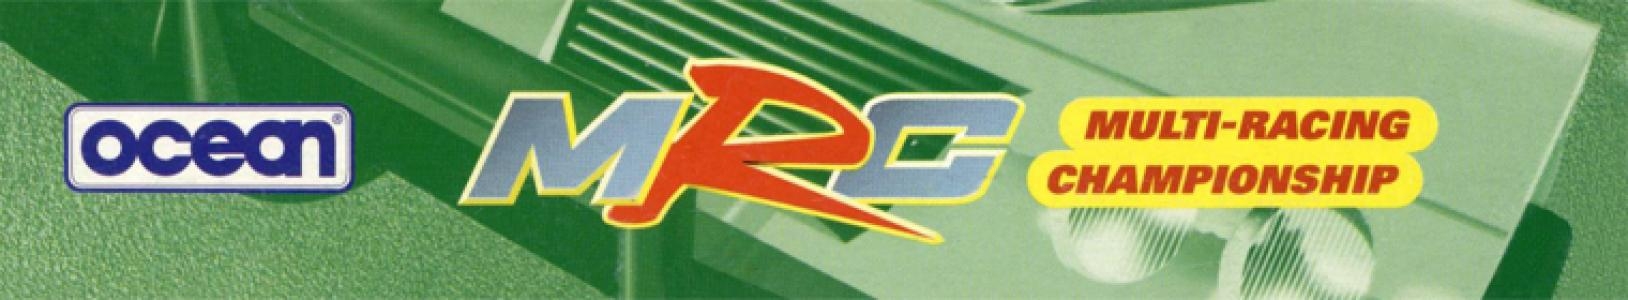 MRC: Multi-Racing Championship banner